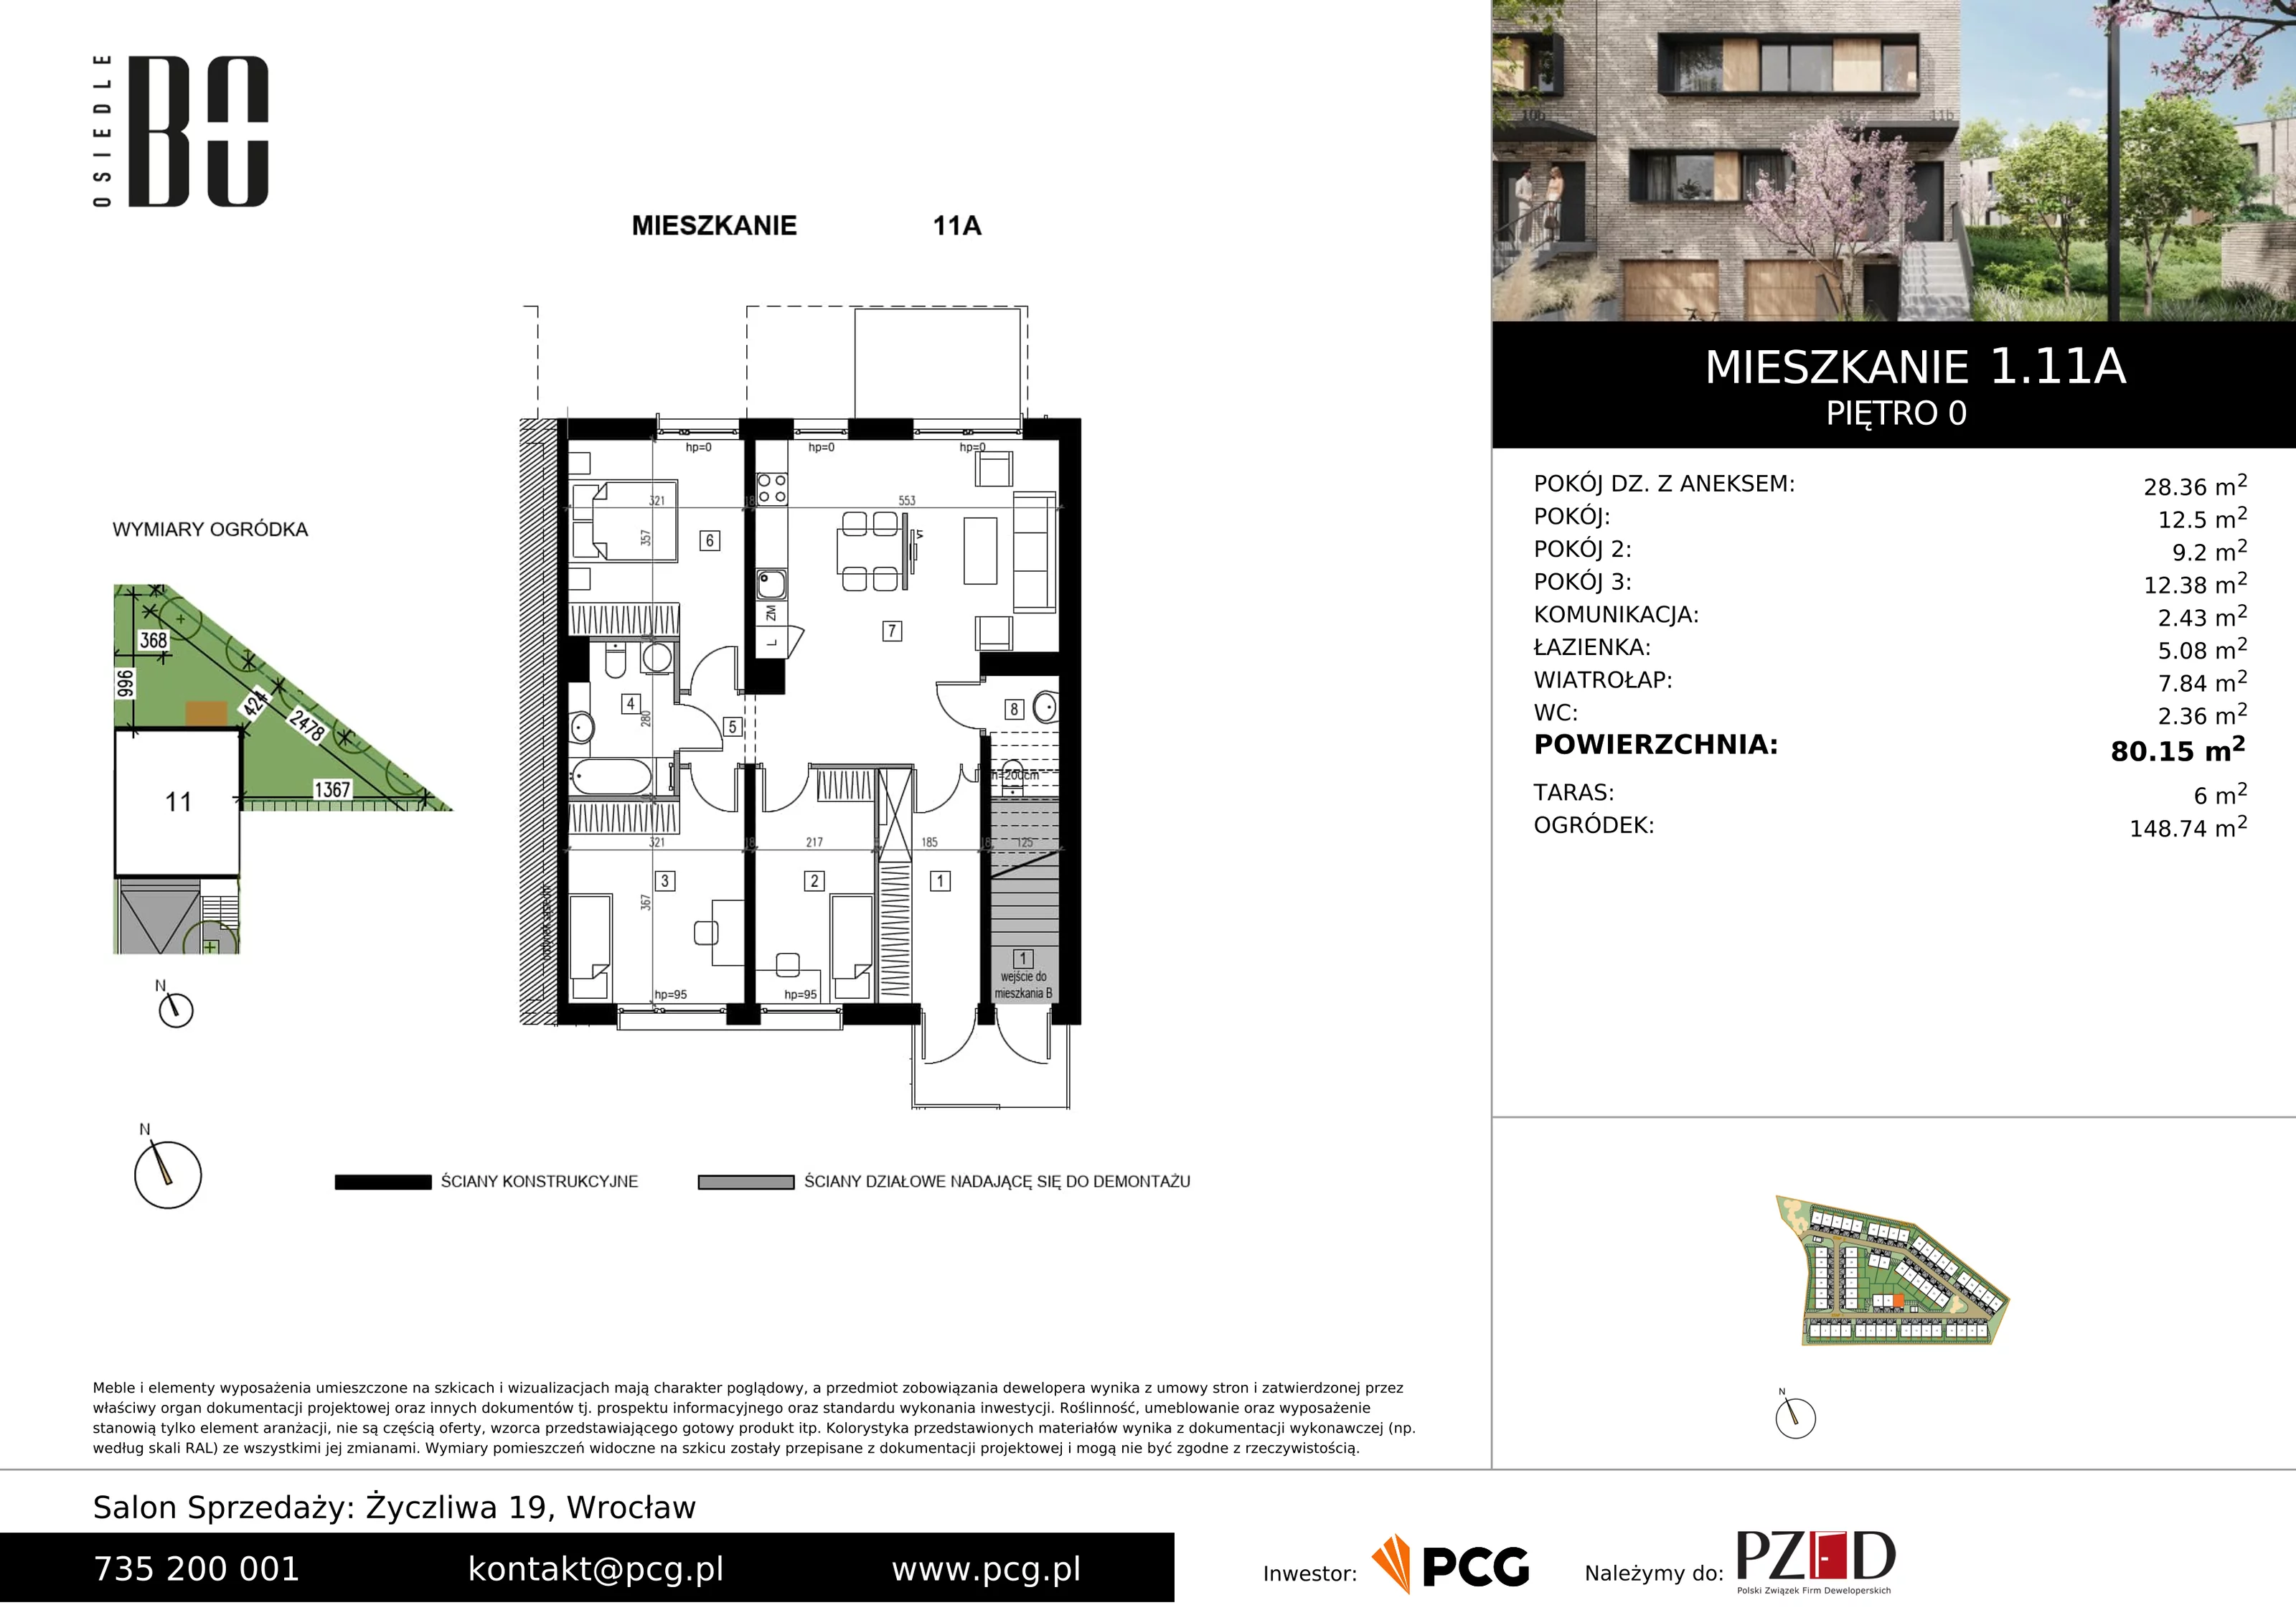 Apartament 80,15 m², parter, oferta nr 1.11A, Osiedle BO, Wrocław, Kowale, ul. Bociana